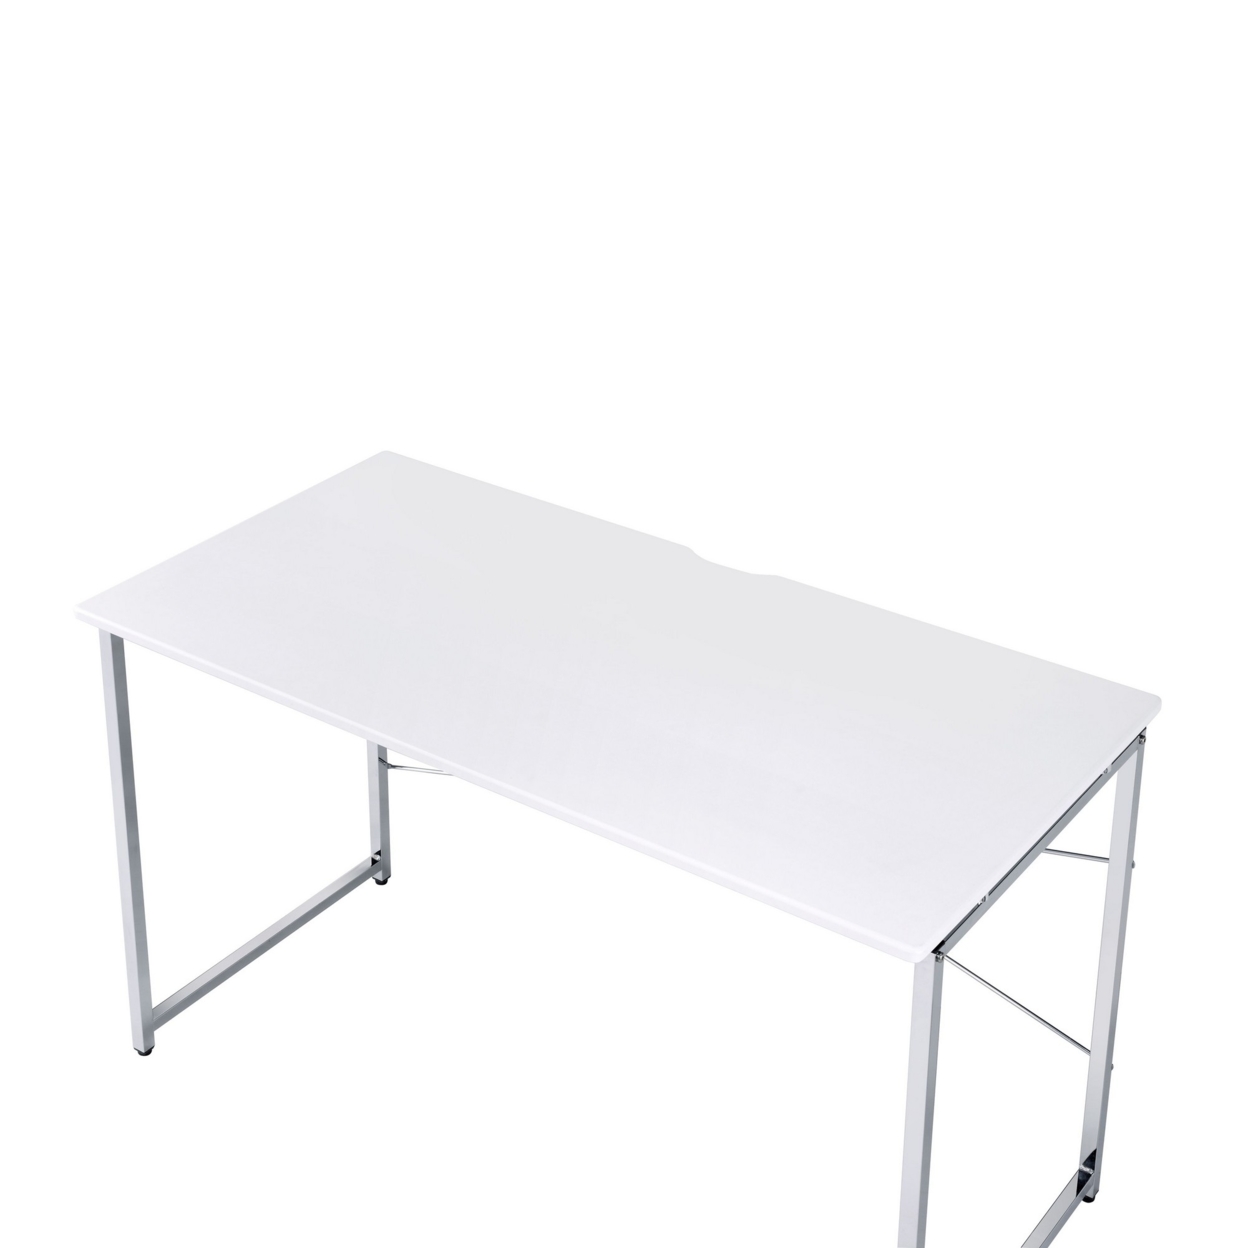 Writing Desk With X Shaped Cross Bar And Chrome Finish, White- Saltoro Sherpi